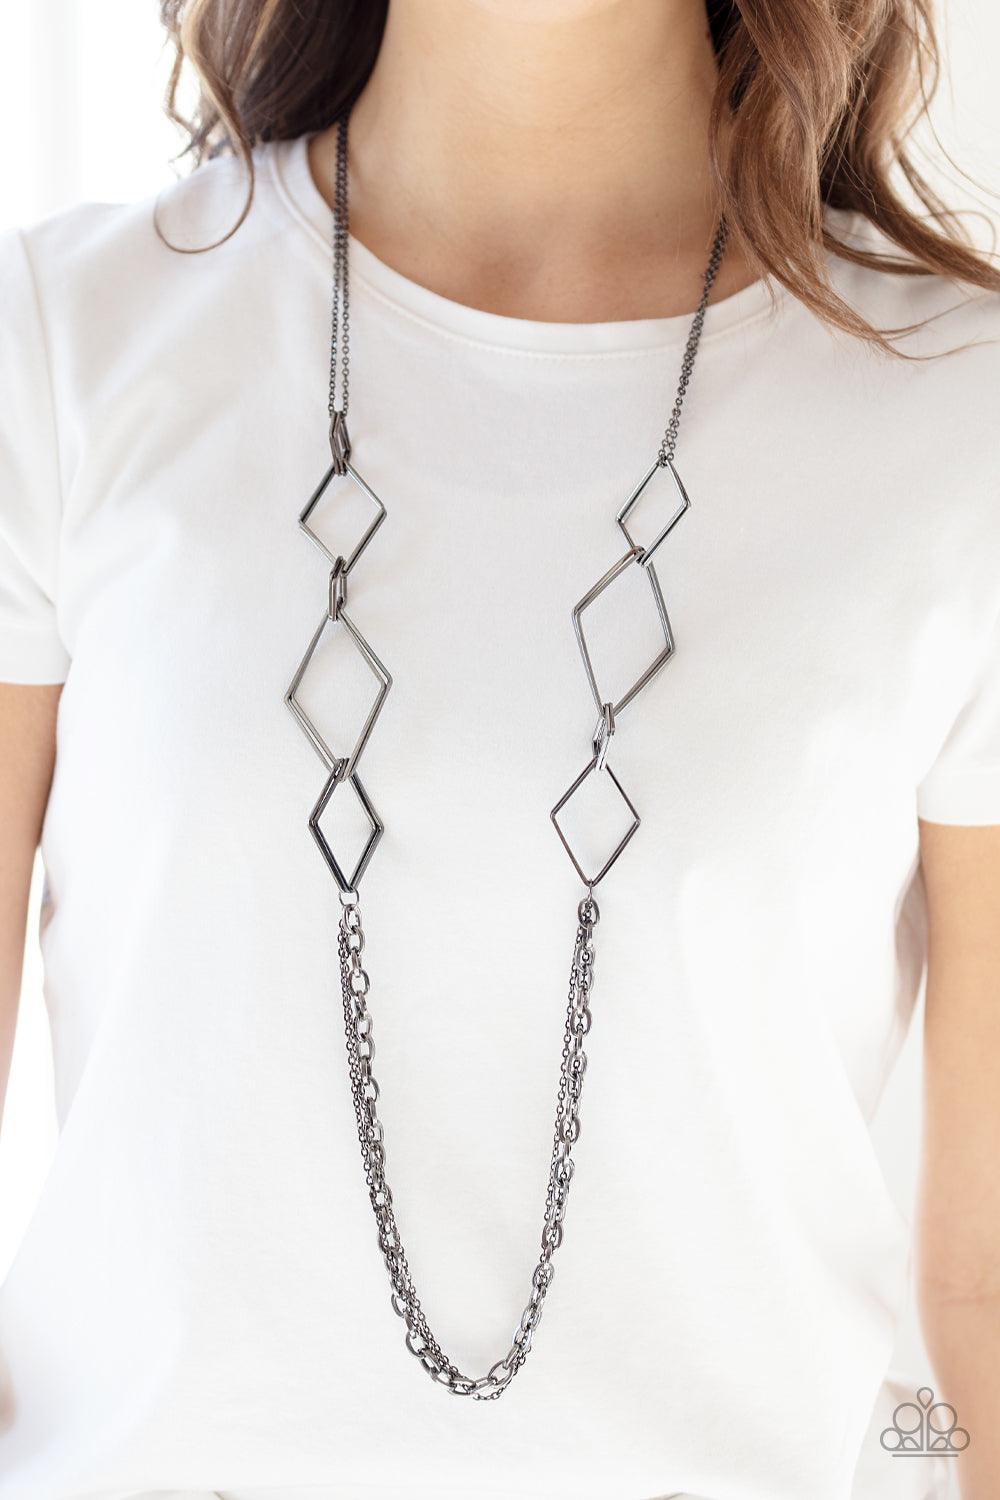 Paparazzi Accessories-Fashion Fave - Black Necklace